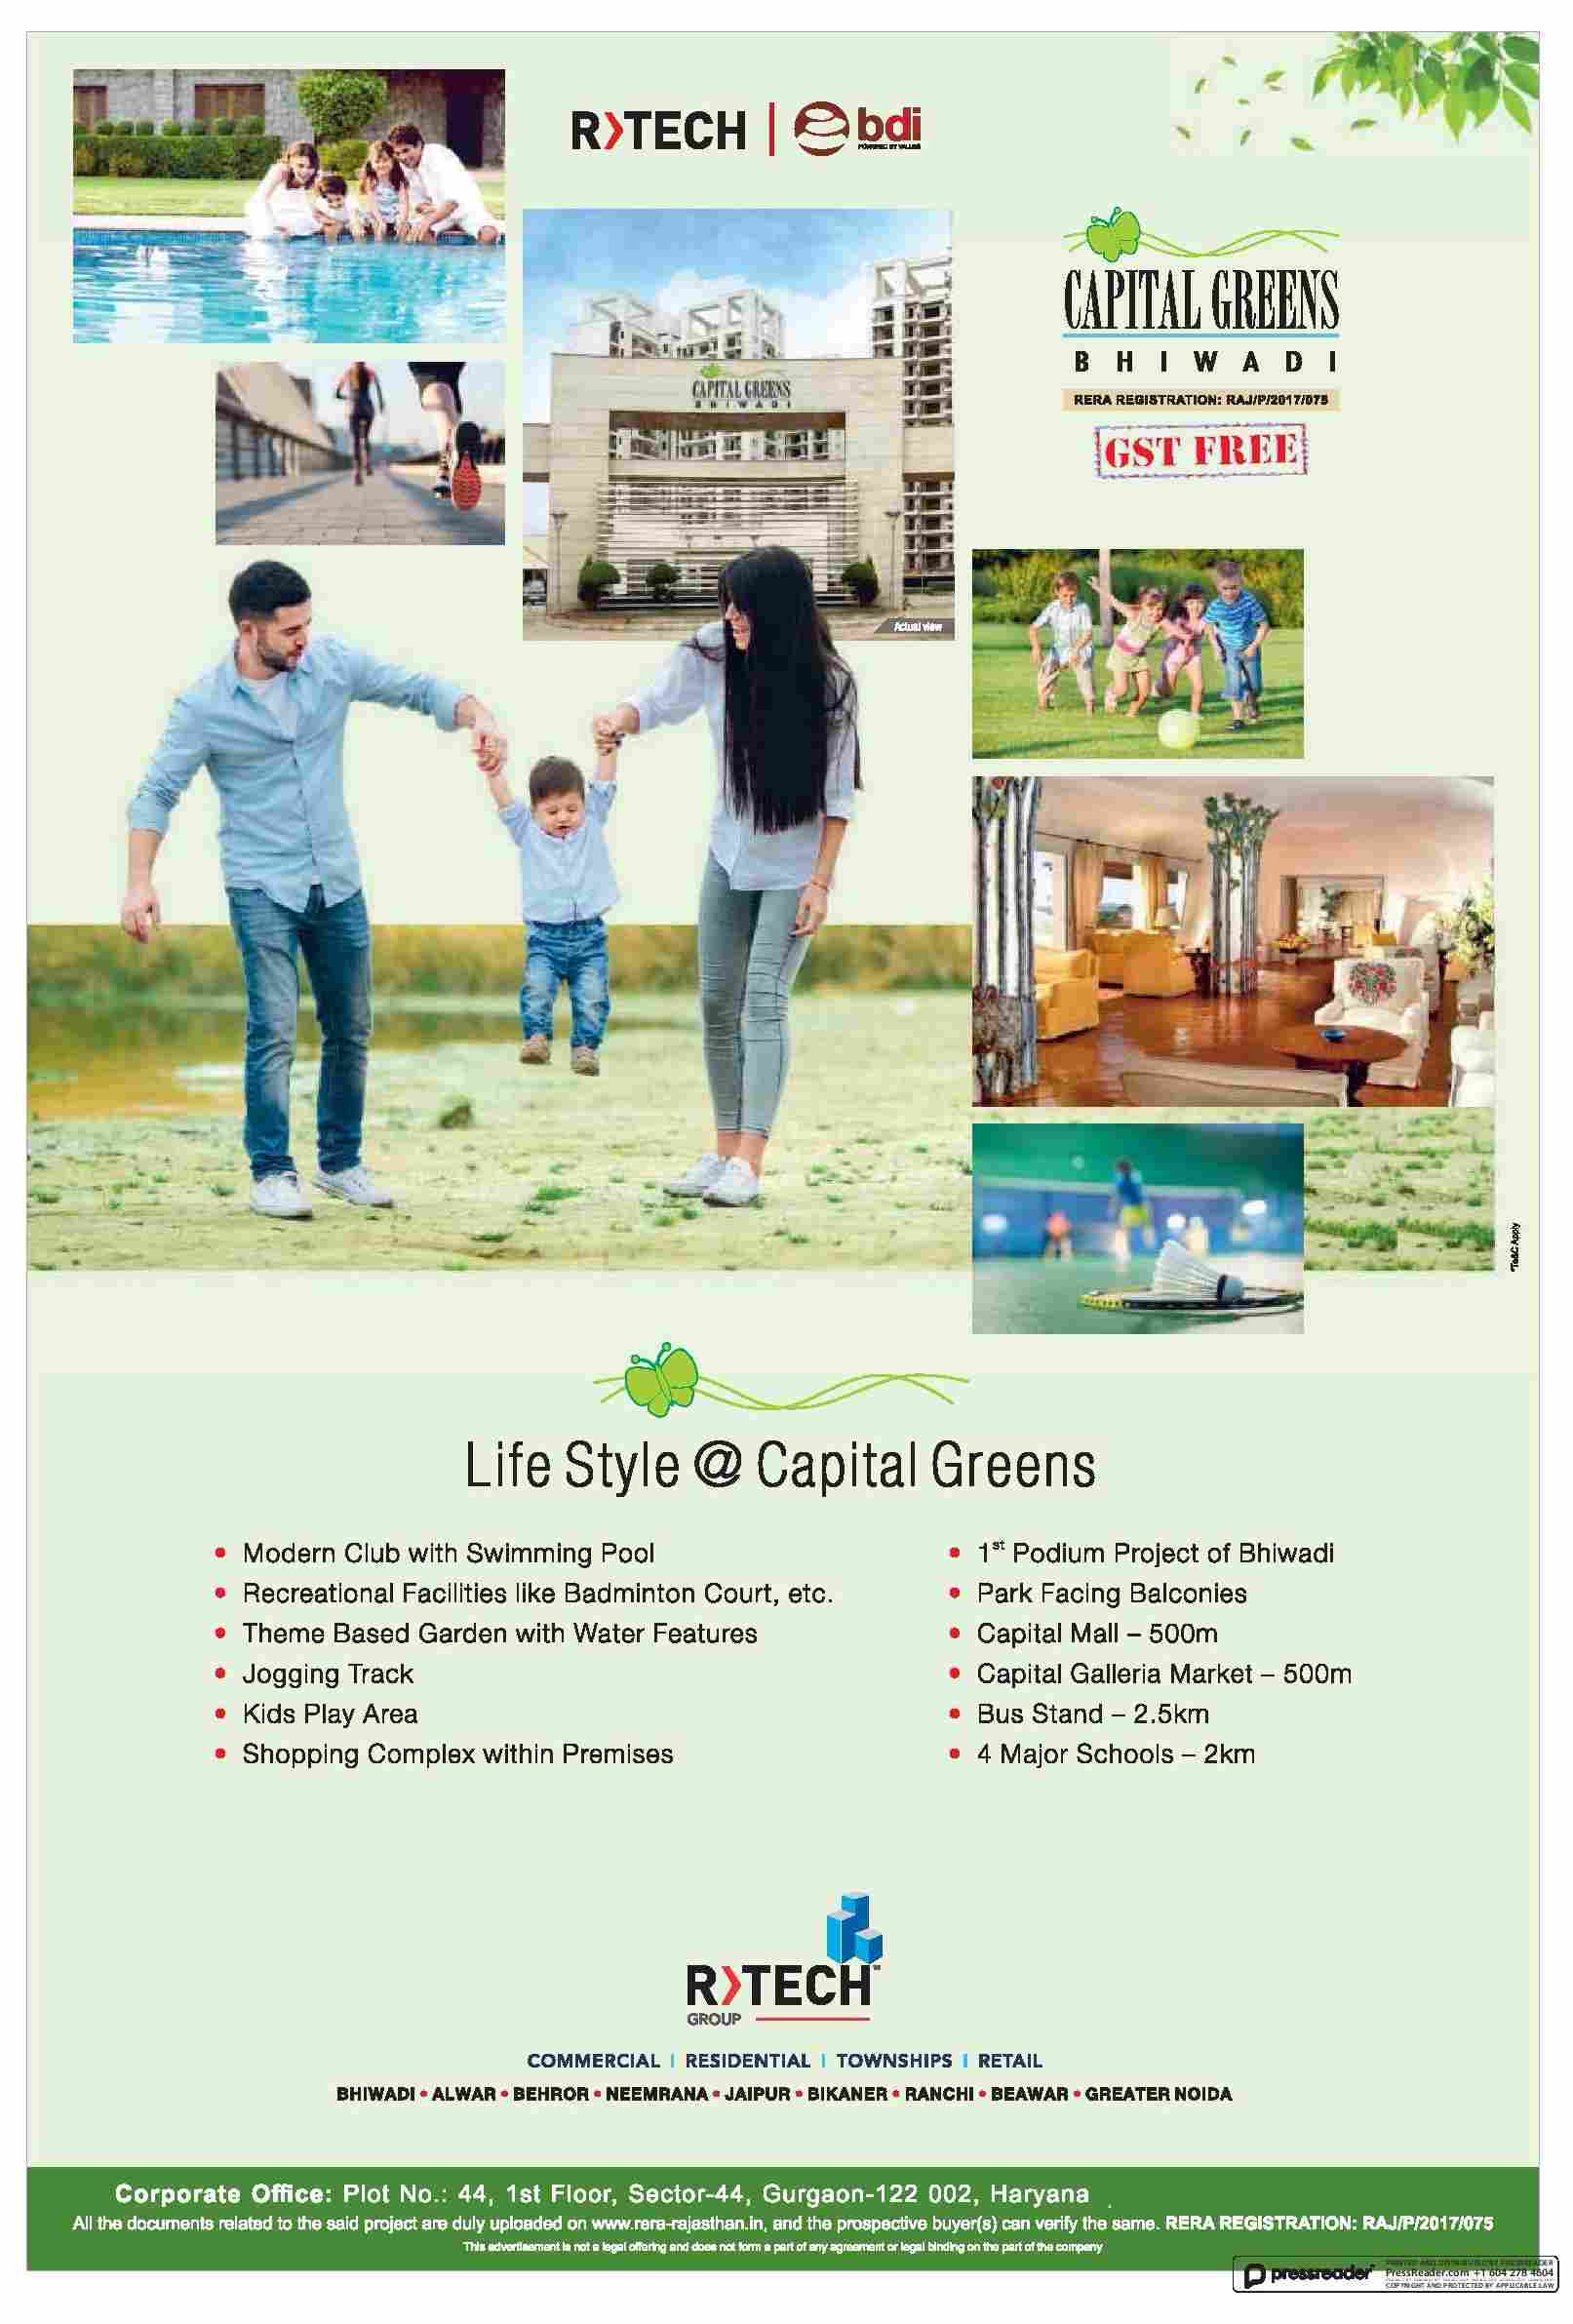 Enjoy the modern lifestyle at R Tech Capital Greens Bhiwadi Update